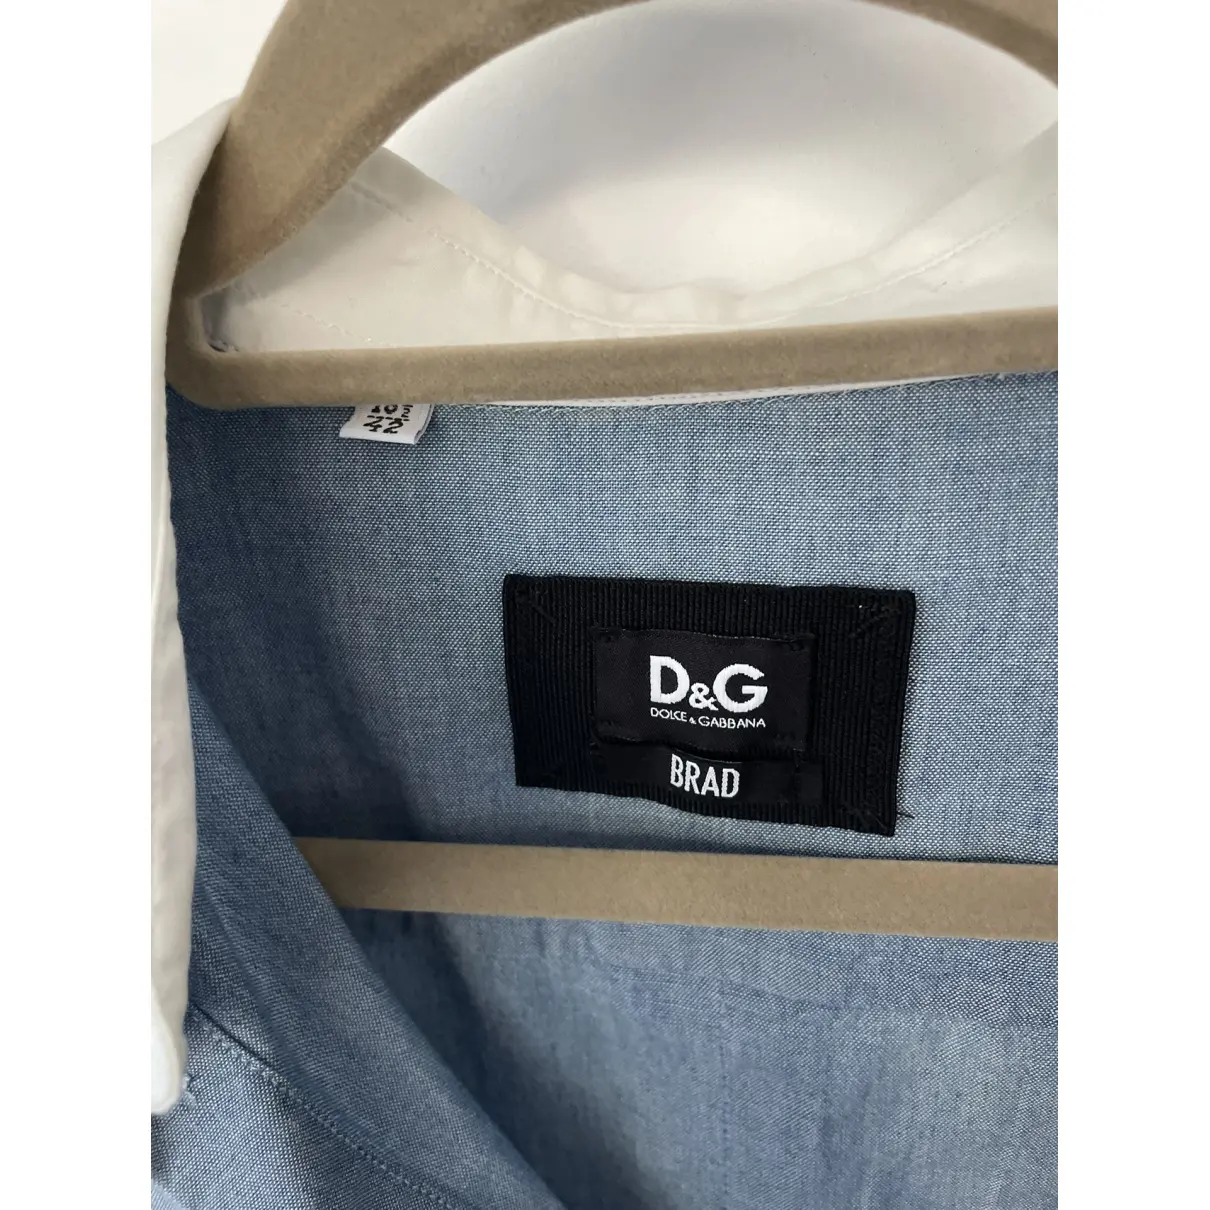 Luxury D&G Shirts Men